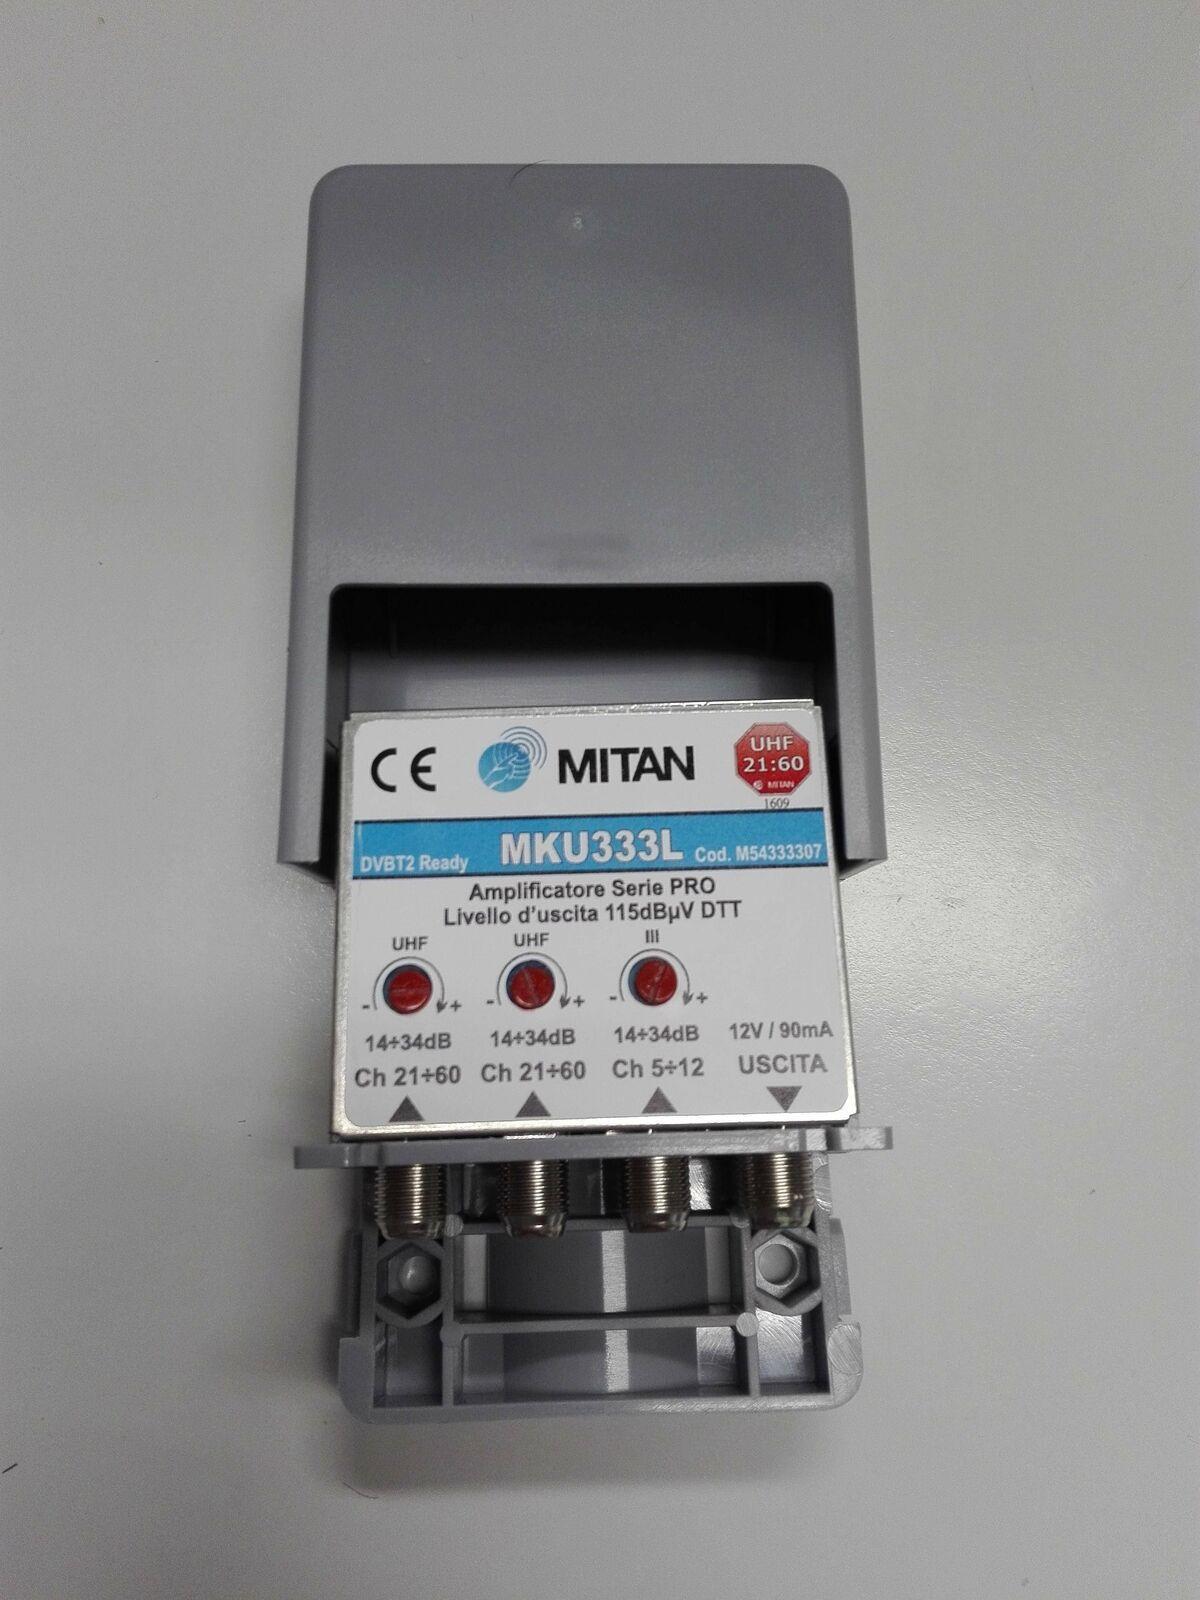 Amplificatore di segnale TV da palo MITAN MKU333G, 3 ingressi, 34dB